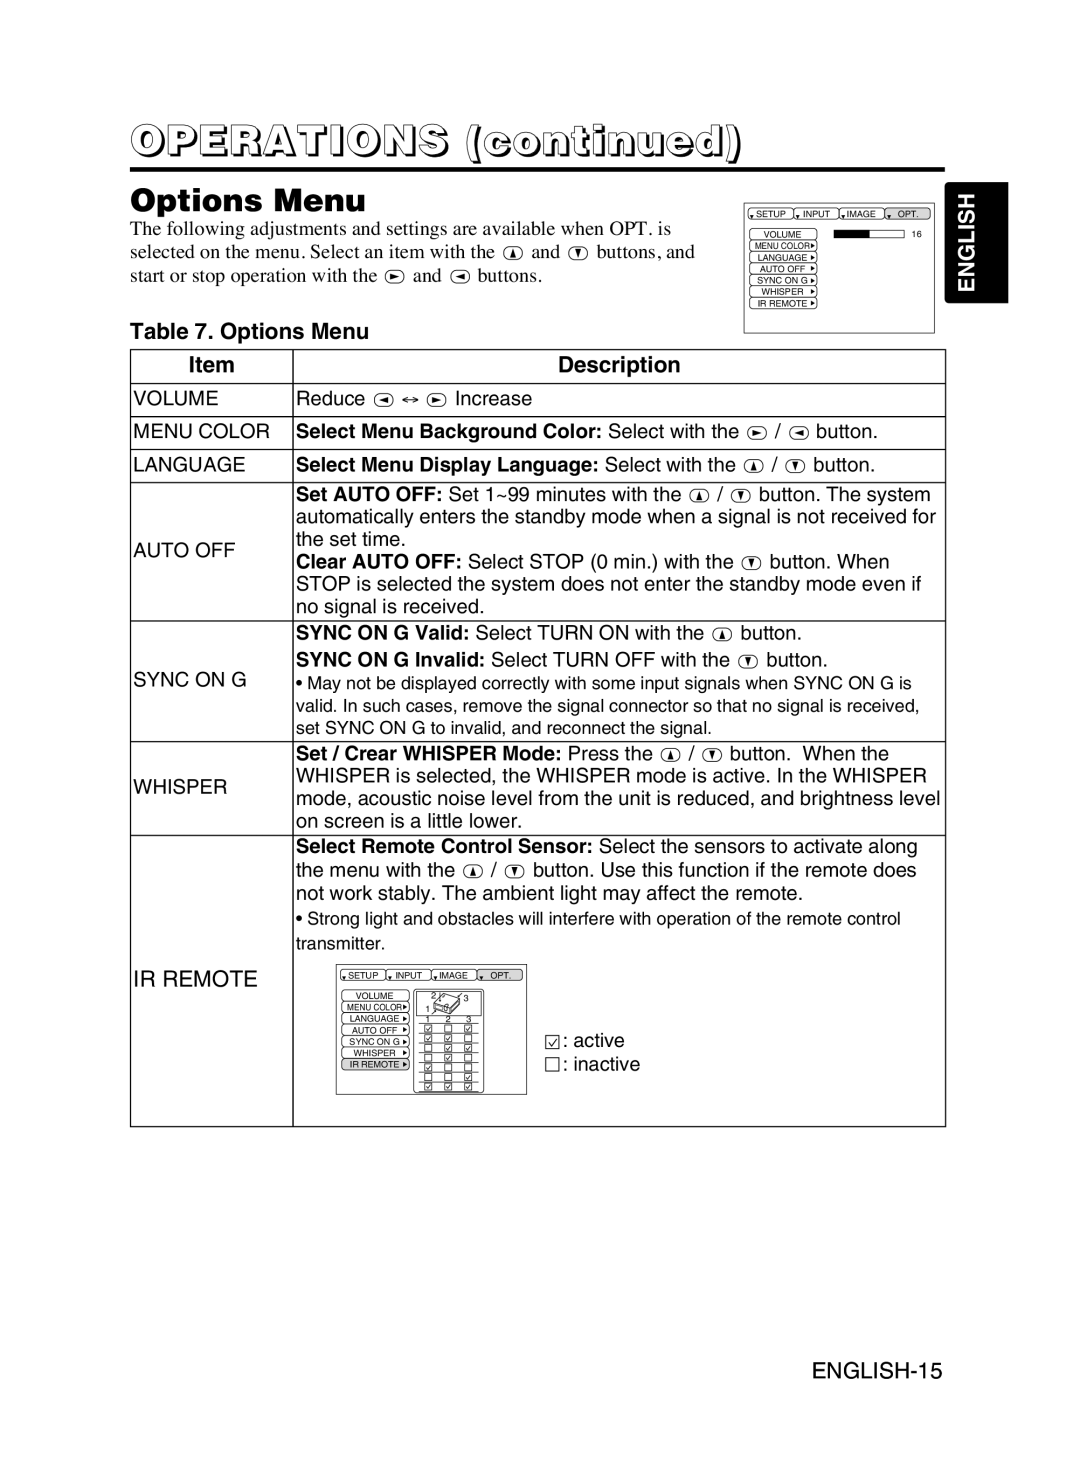 Dukane 8053 user manual Options Menu, OPERATIONS continued, English, Description 